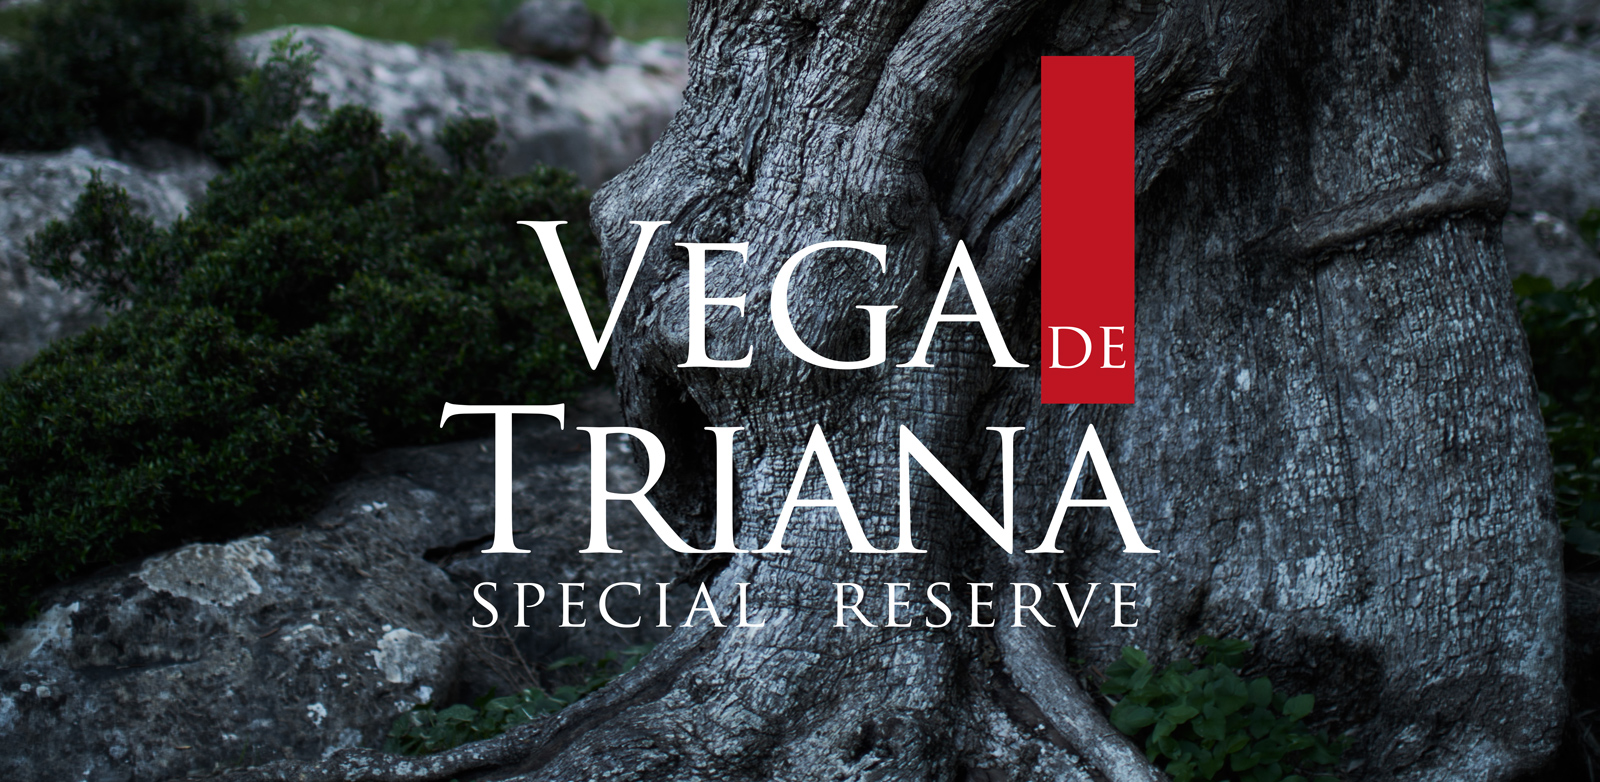 Portfolio of logo and brand creation design works for extra virgin olive oil manufacturer VEGA DE TRIANA